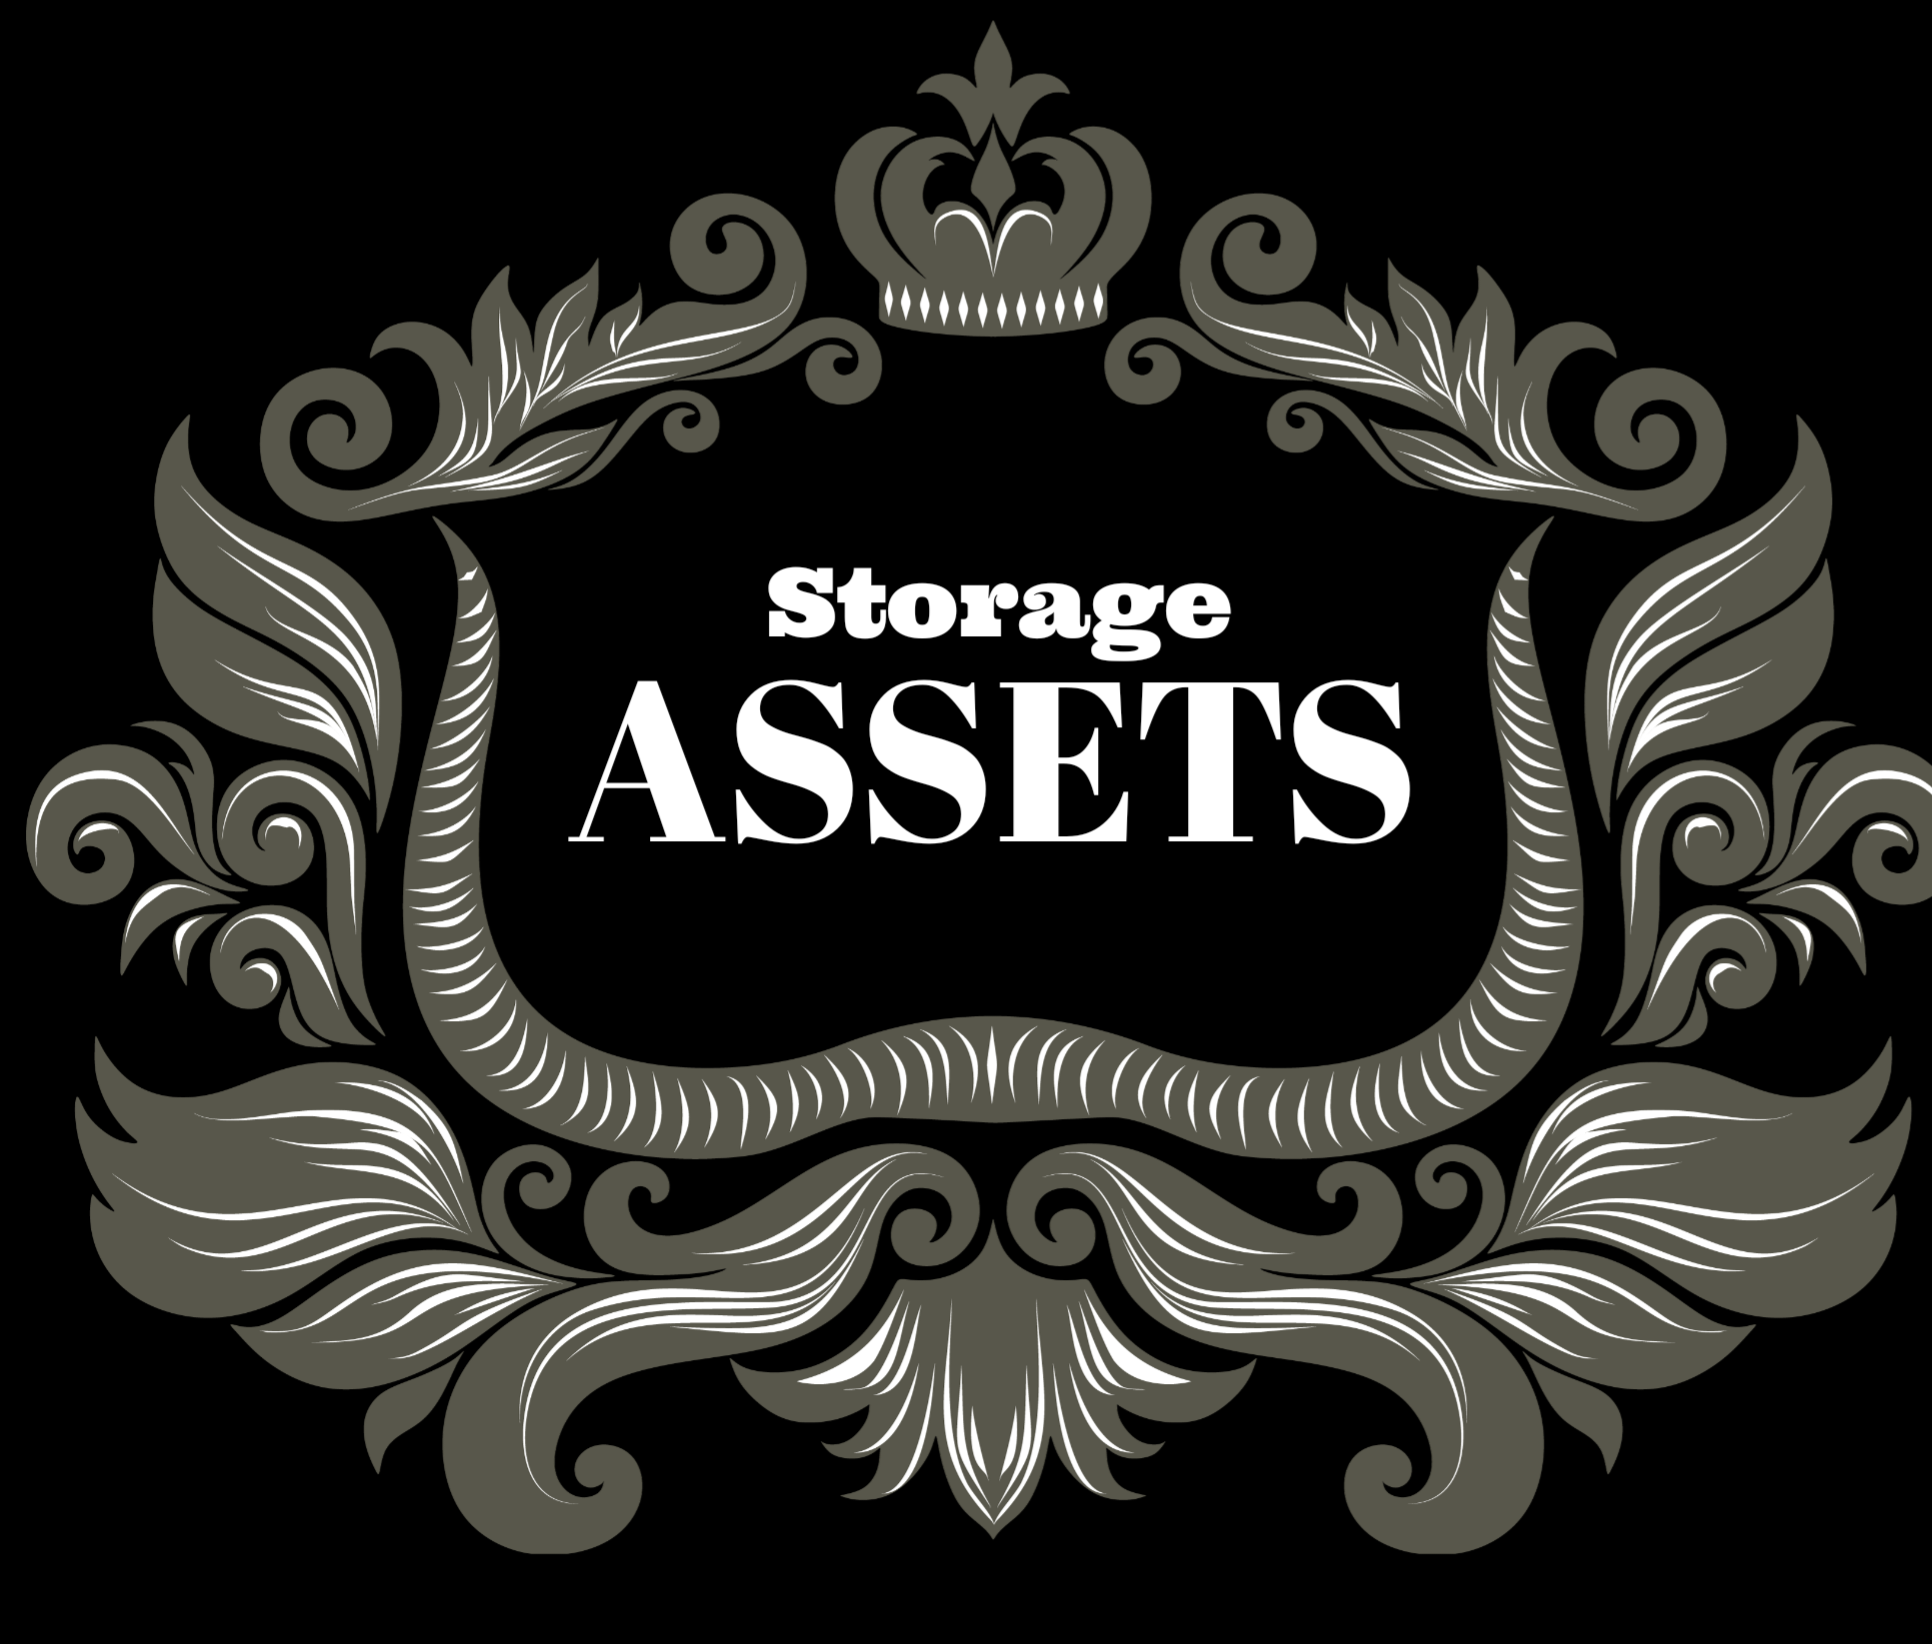 Storage Assets | Auction Ninja